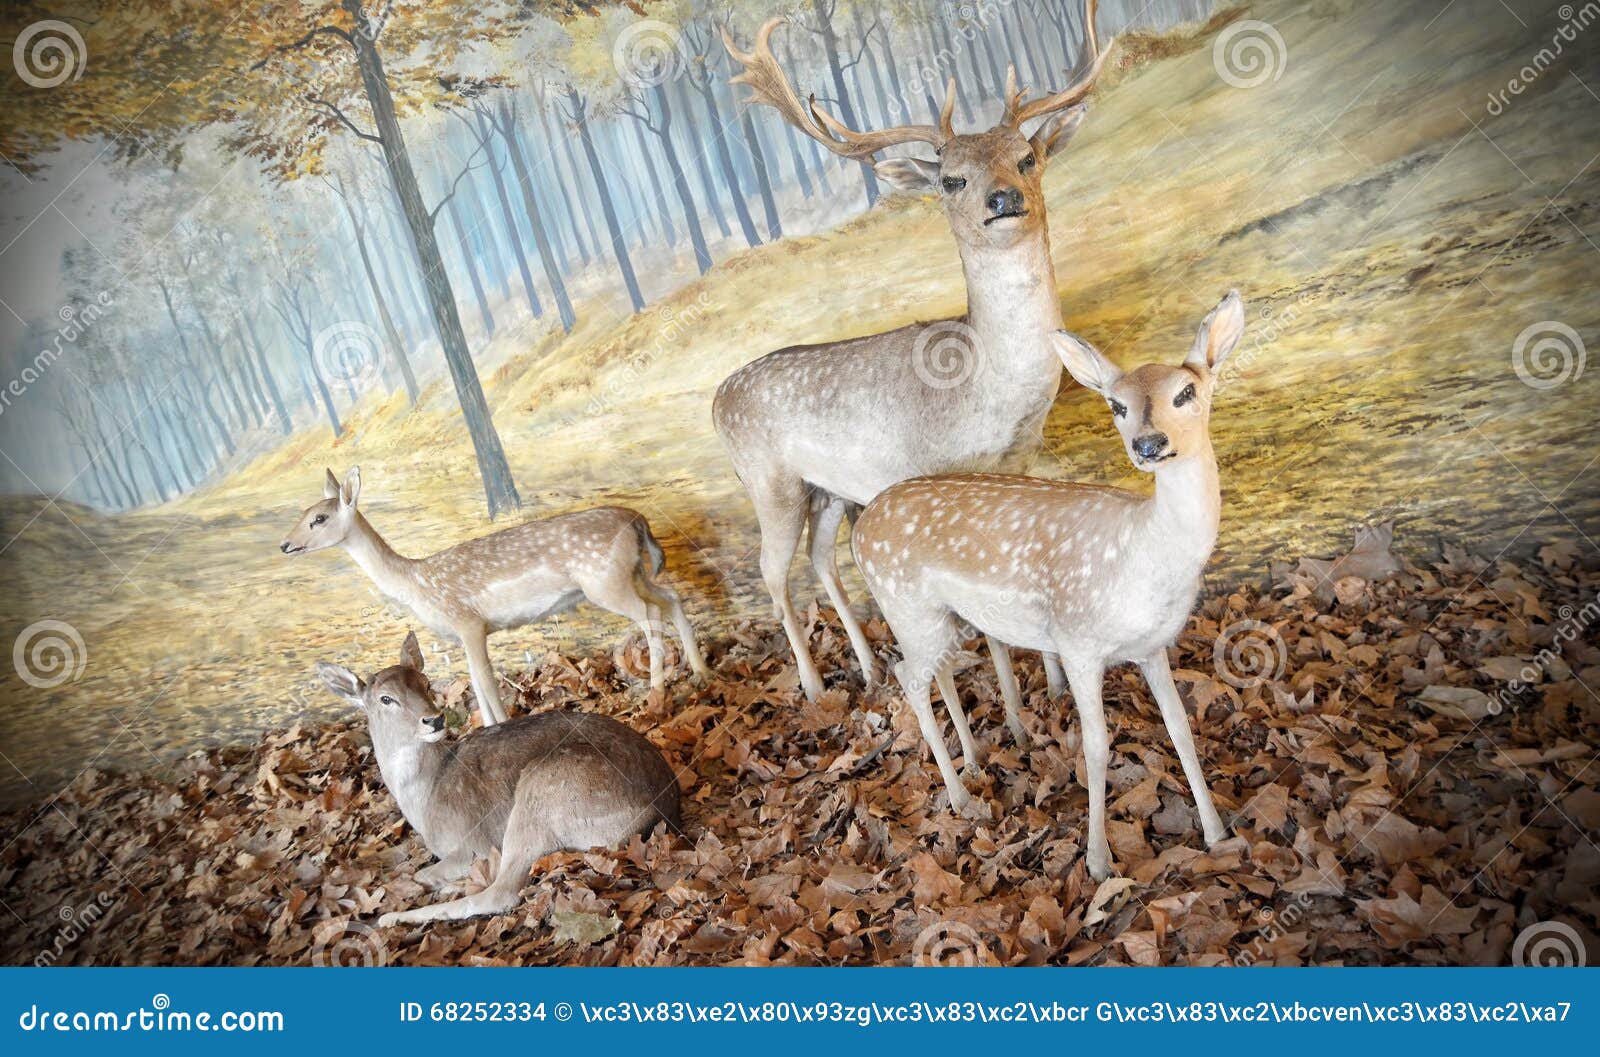 diorama of deers